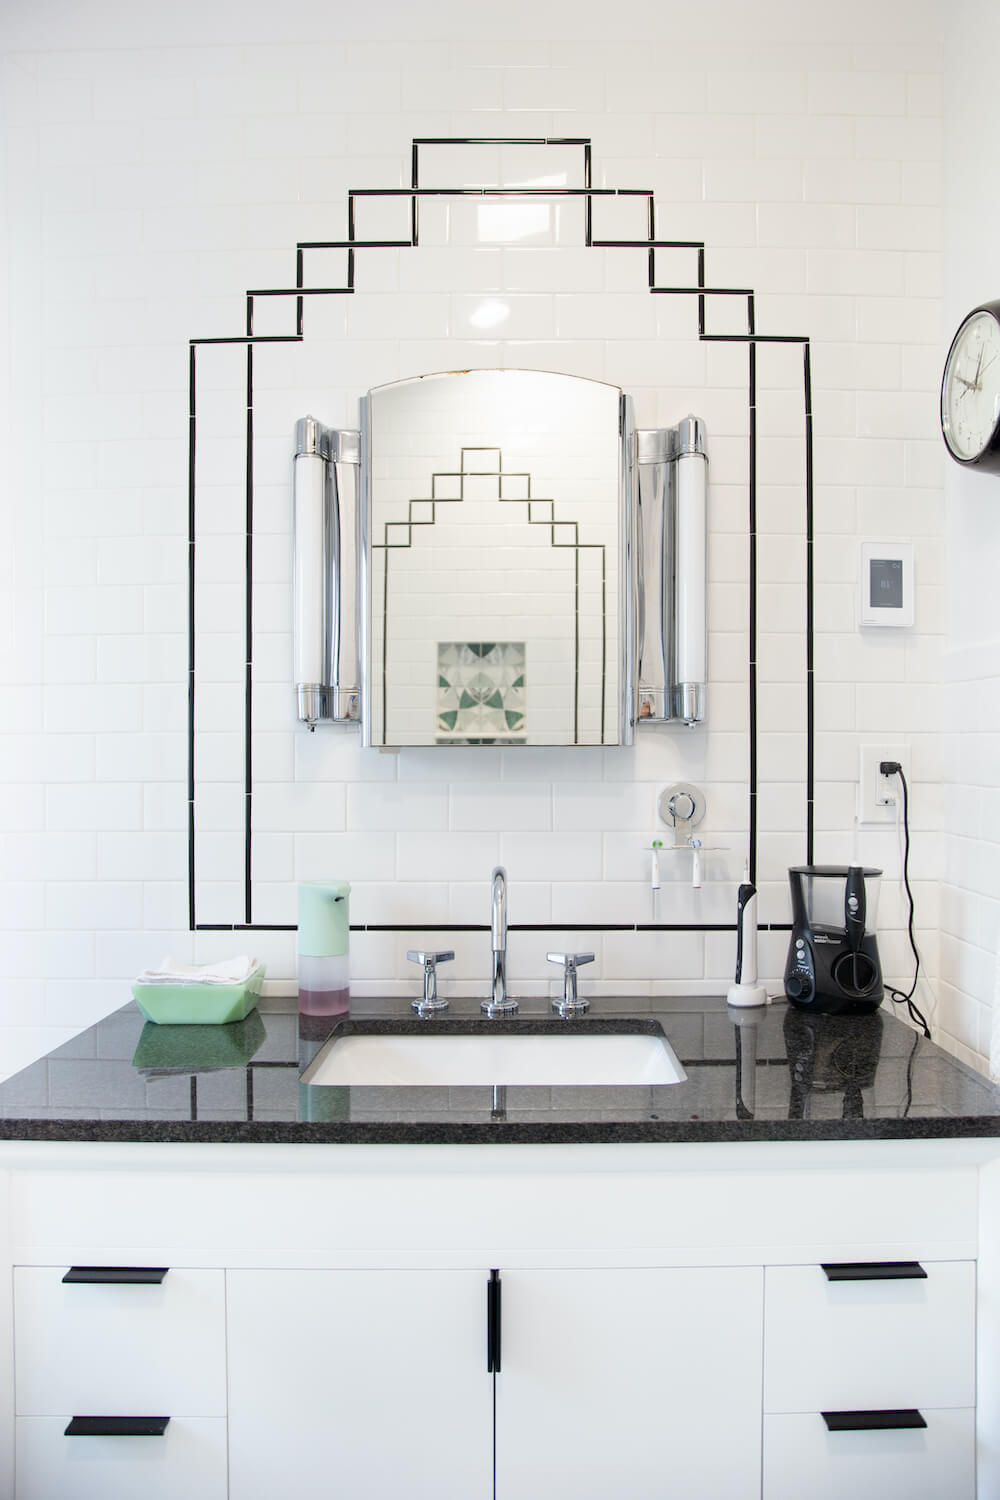 Bathroom sink vanity framed by stylized tile patterning